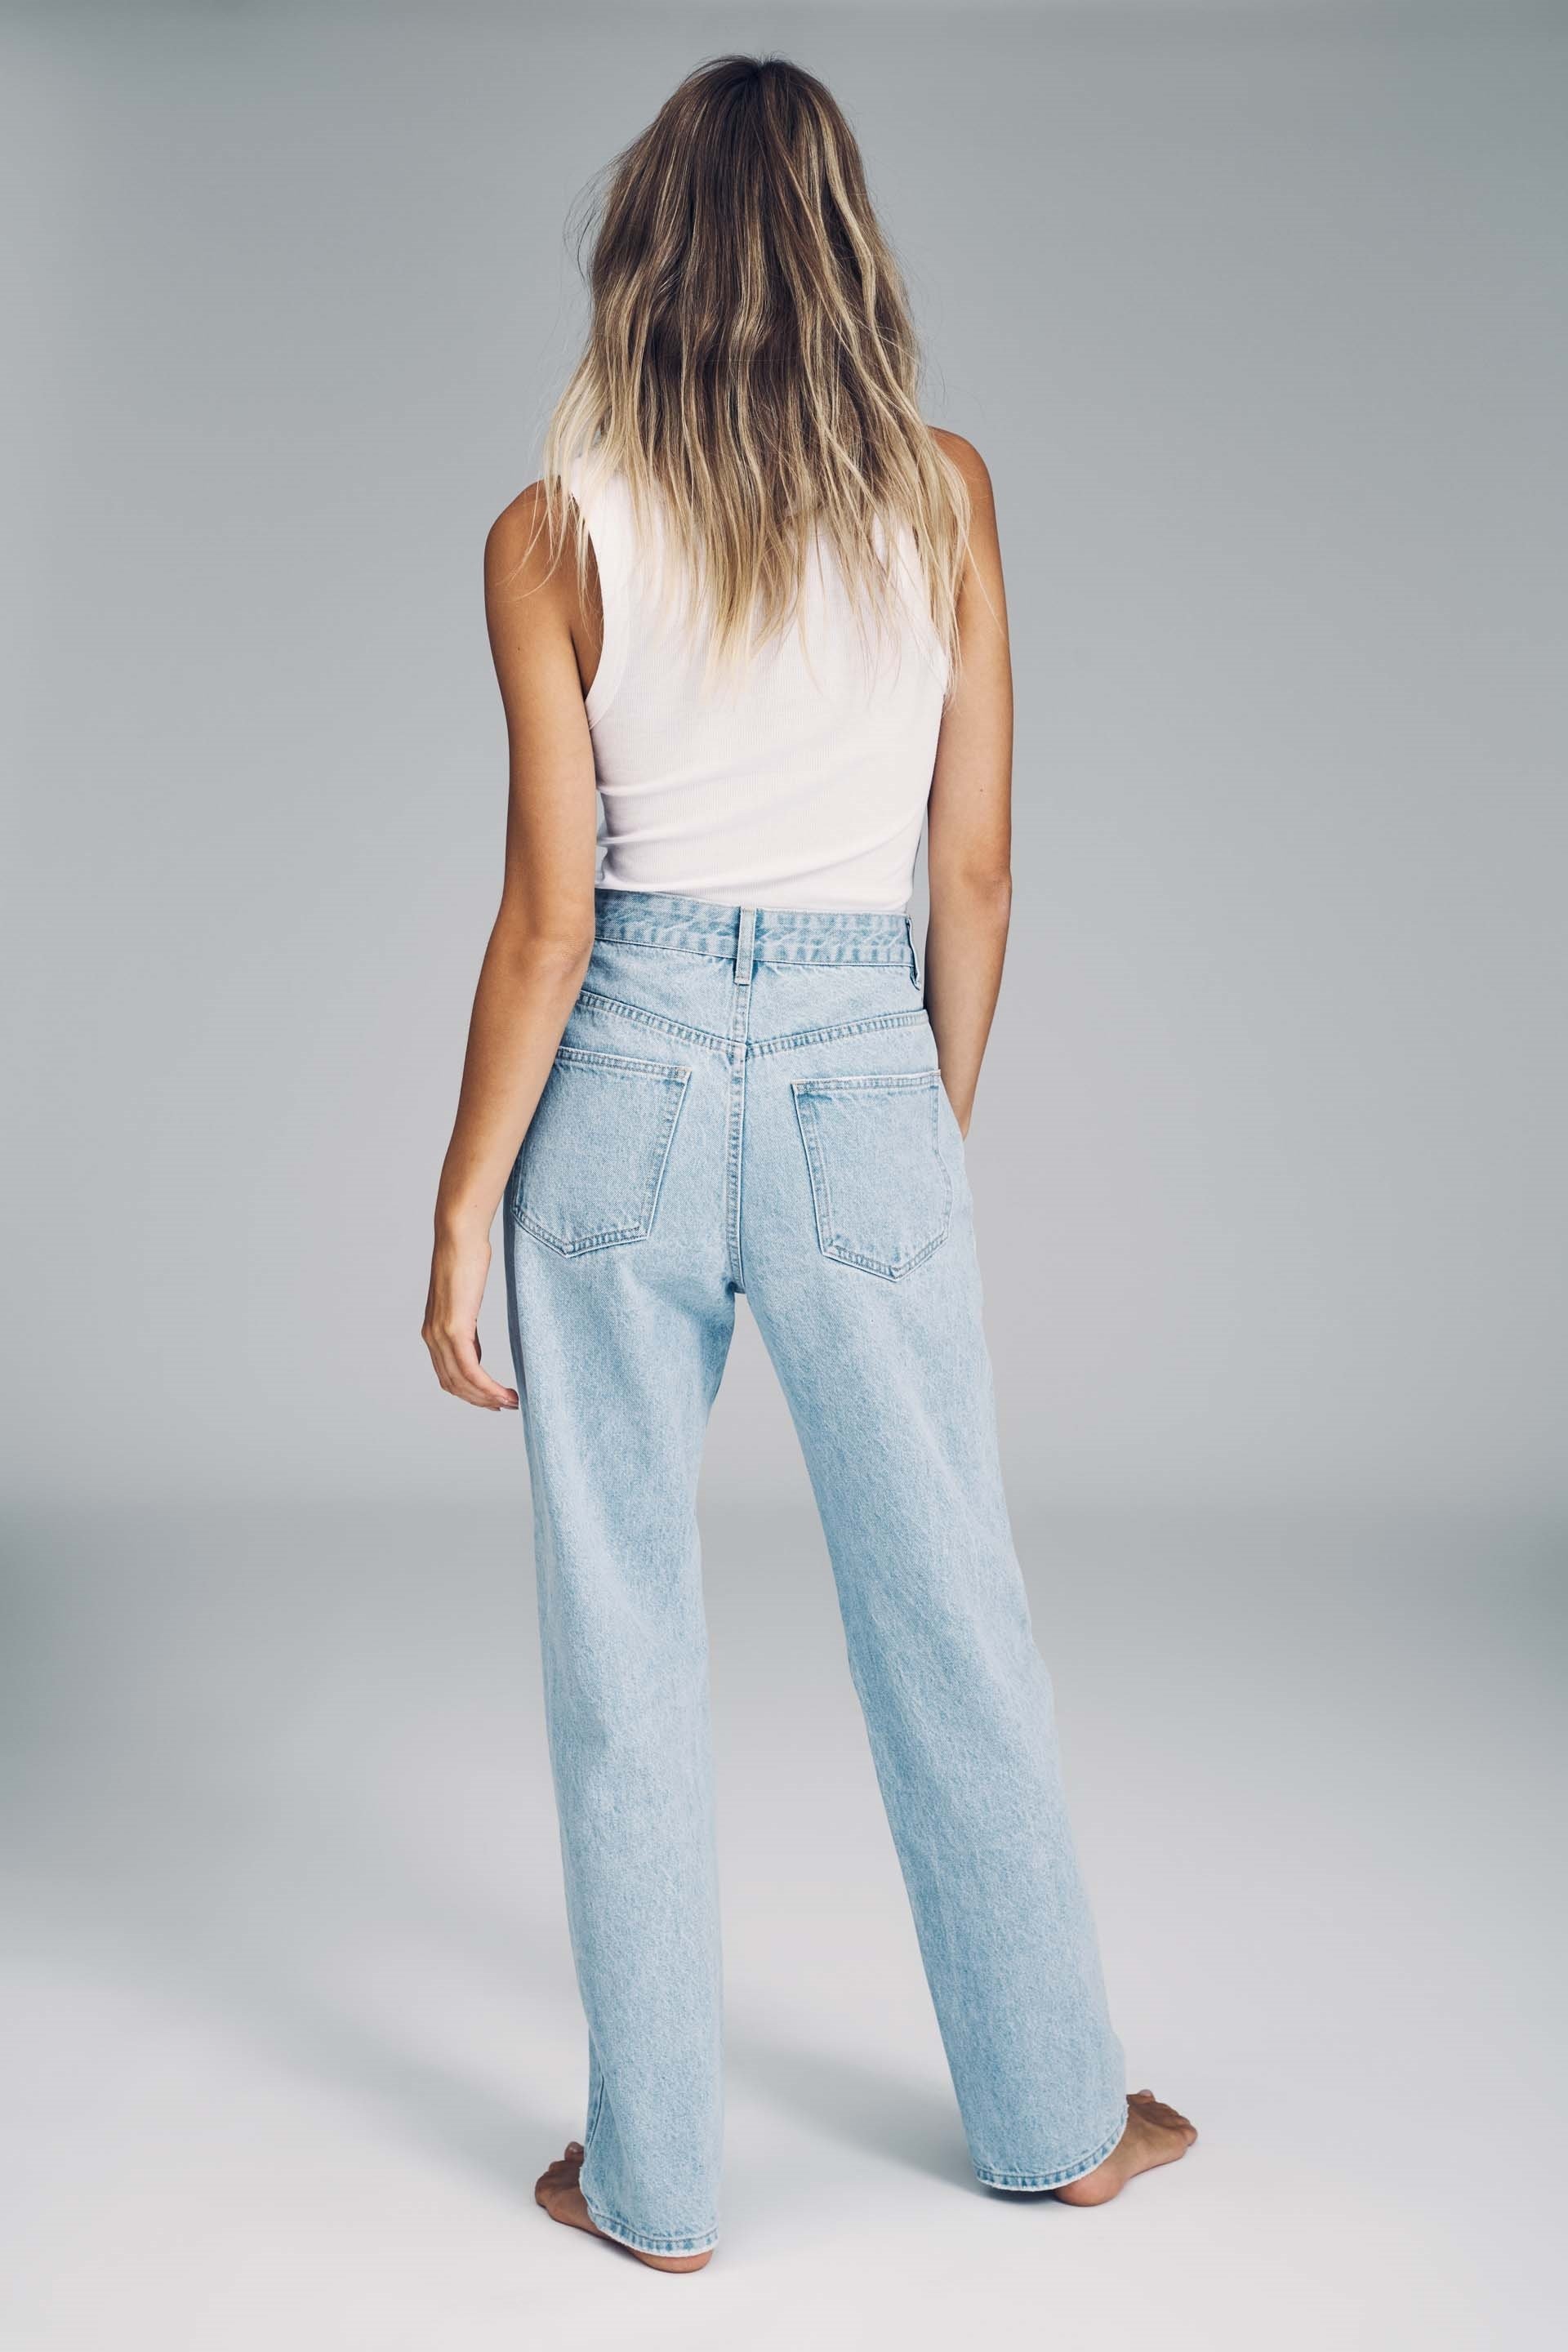 Cotton On Women - Long Straight Jean - Addis blue